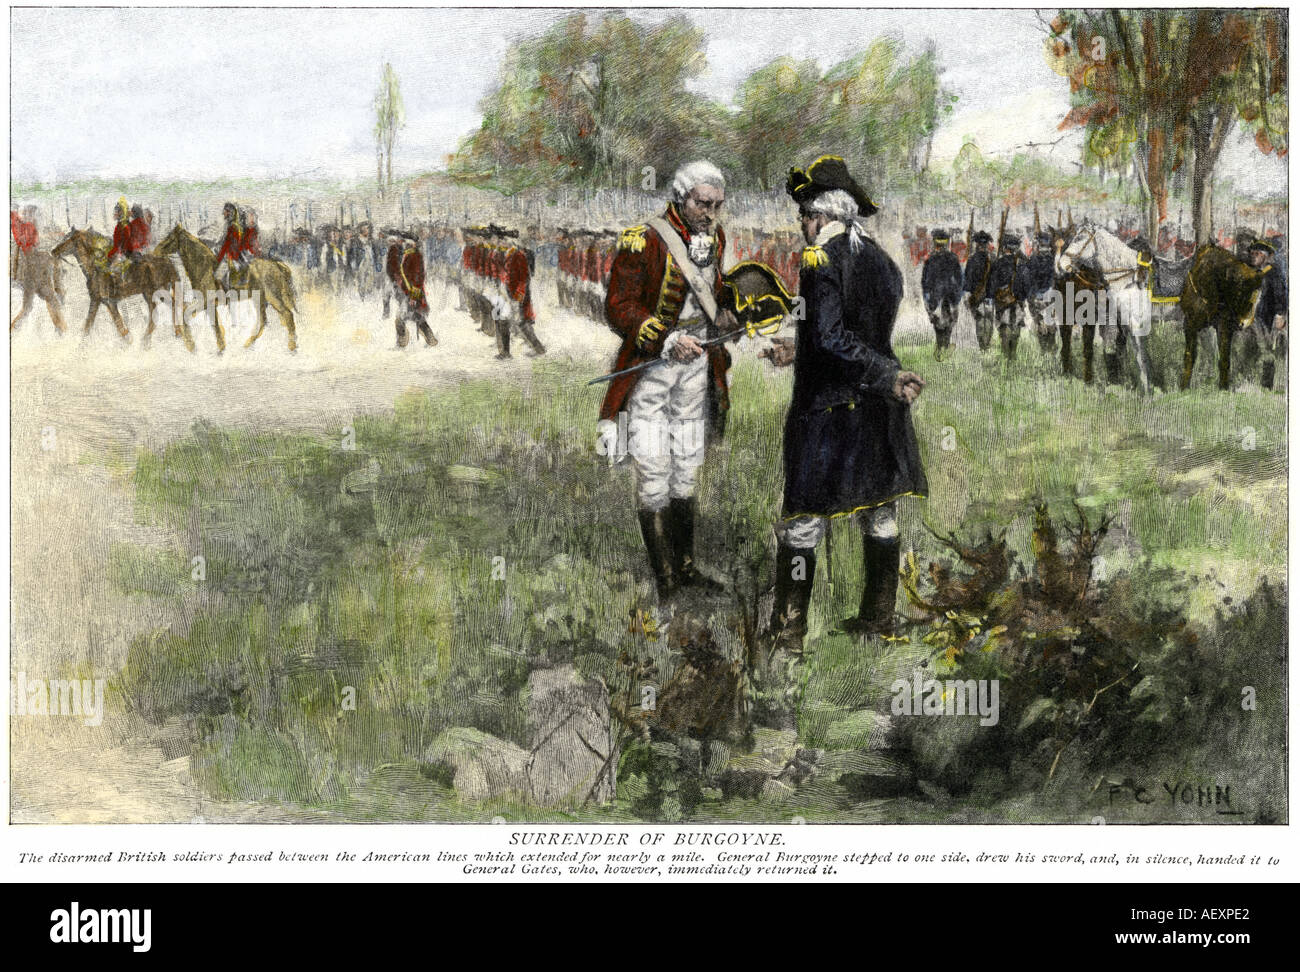 Surrender of British commander John Burgoyne to American General Horatio Gates at Saratoga NY 1777. Hand-colored woodcut of an F.C. Yohn illustration Stock Photo